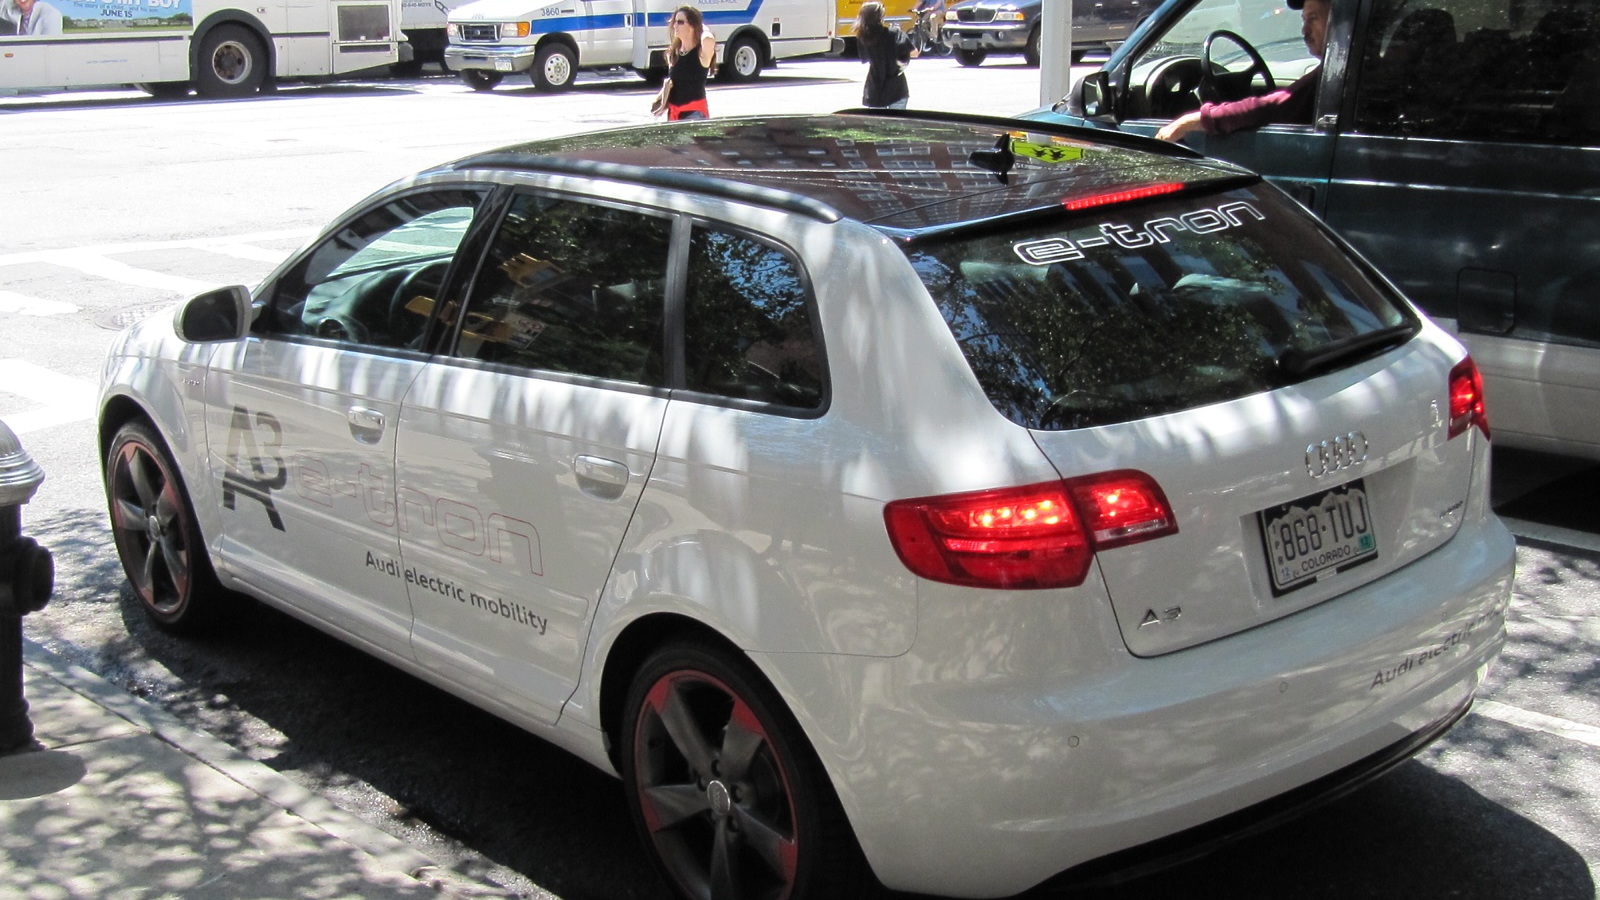 Audi A3 e-tron prototype: first drive, June 2012